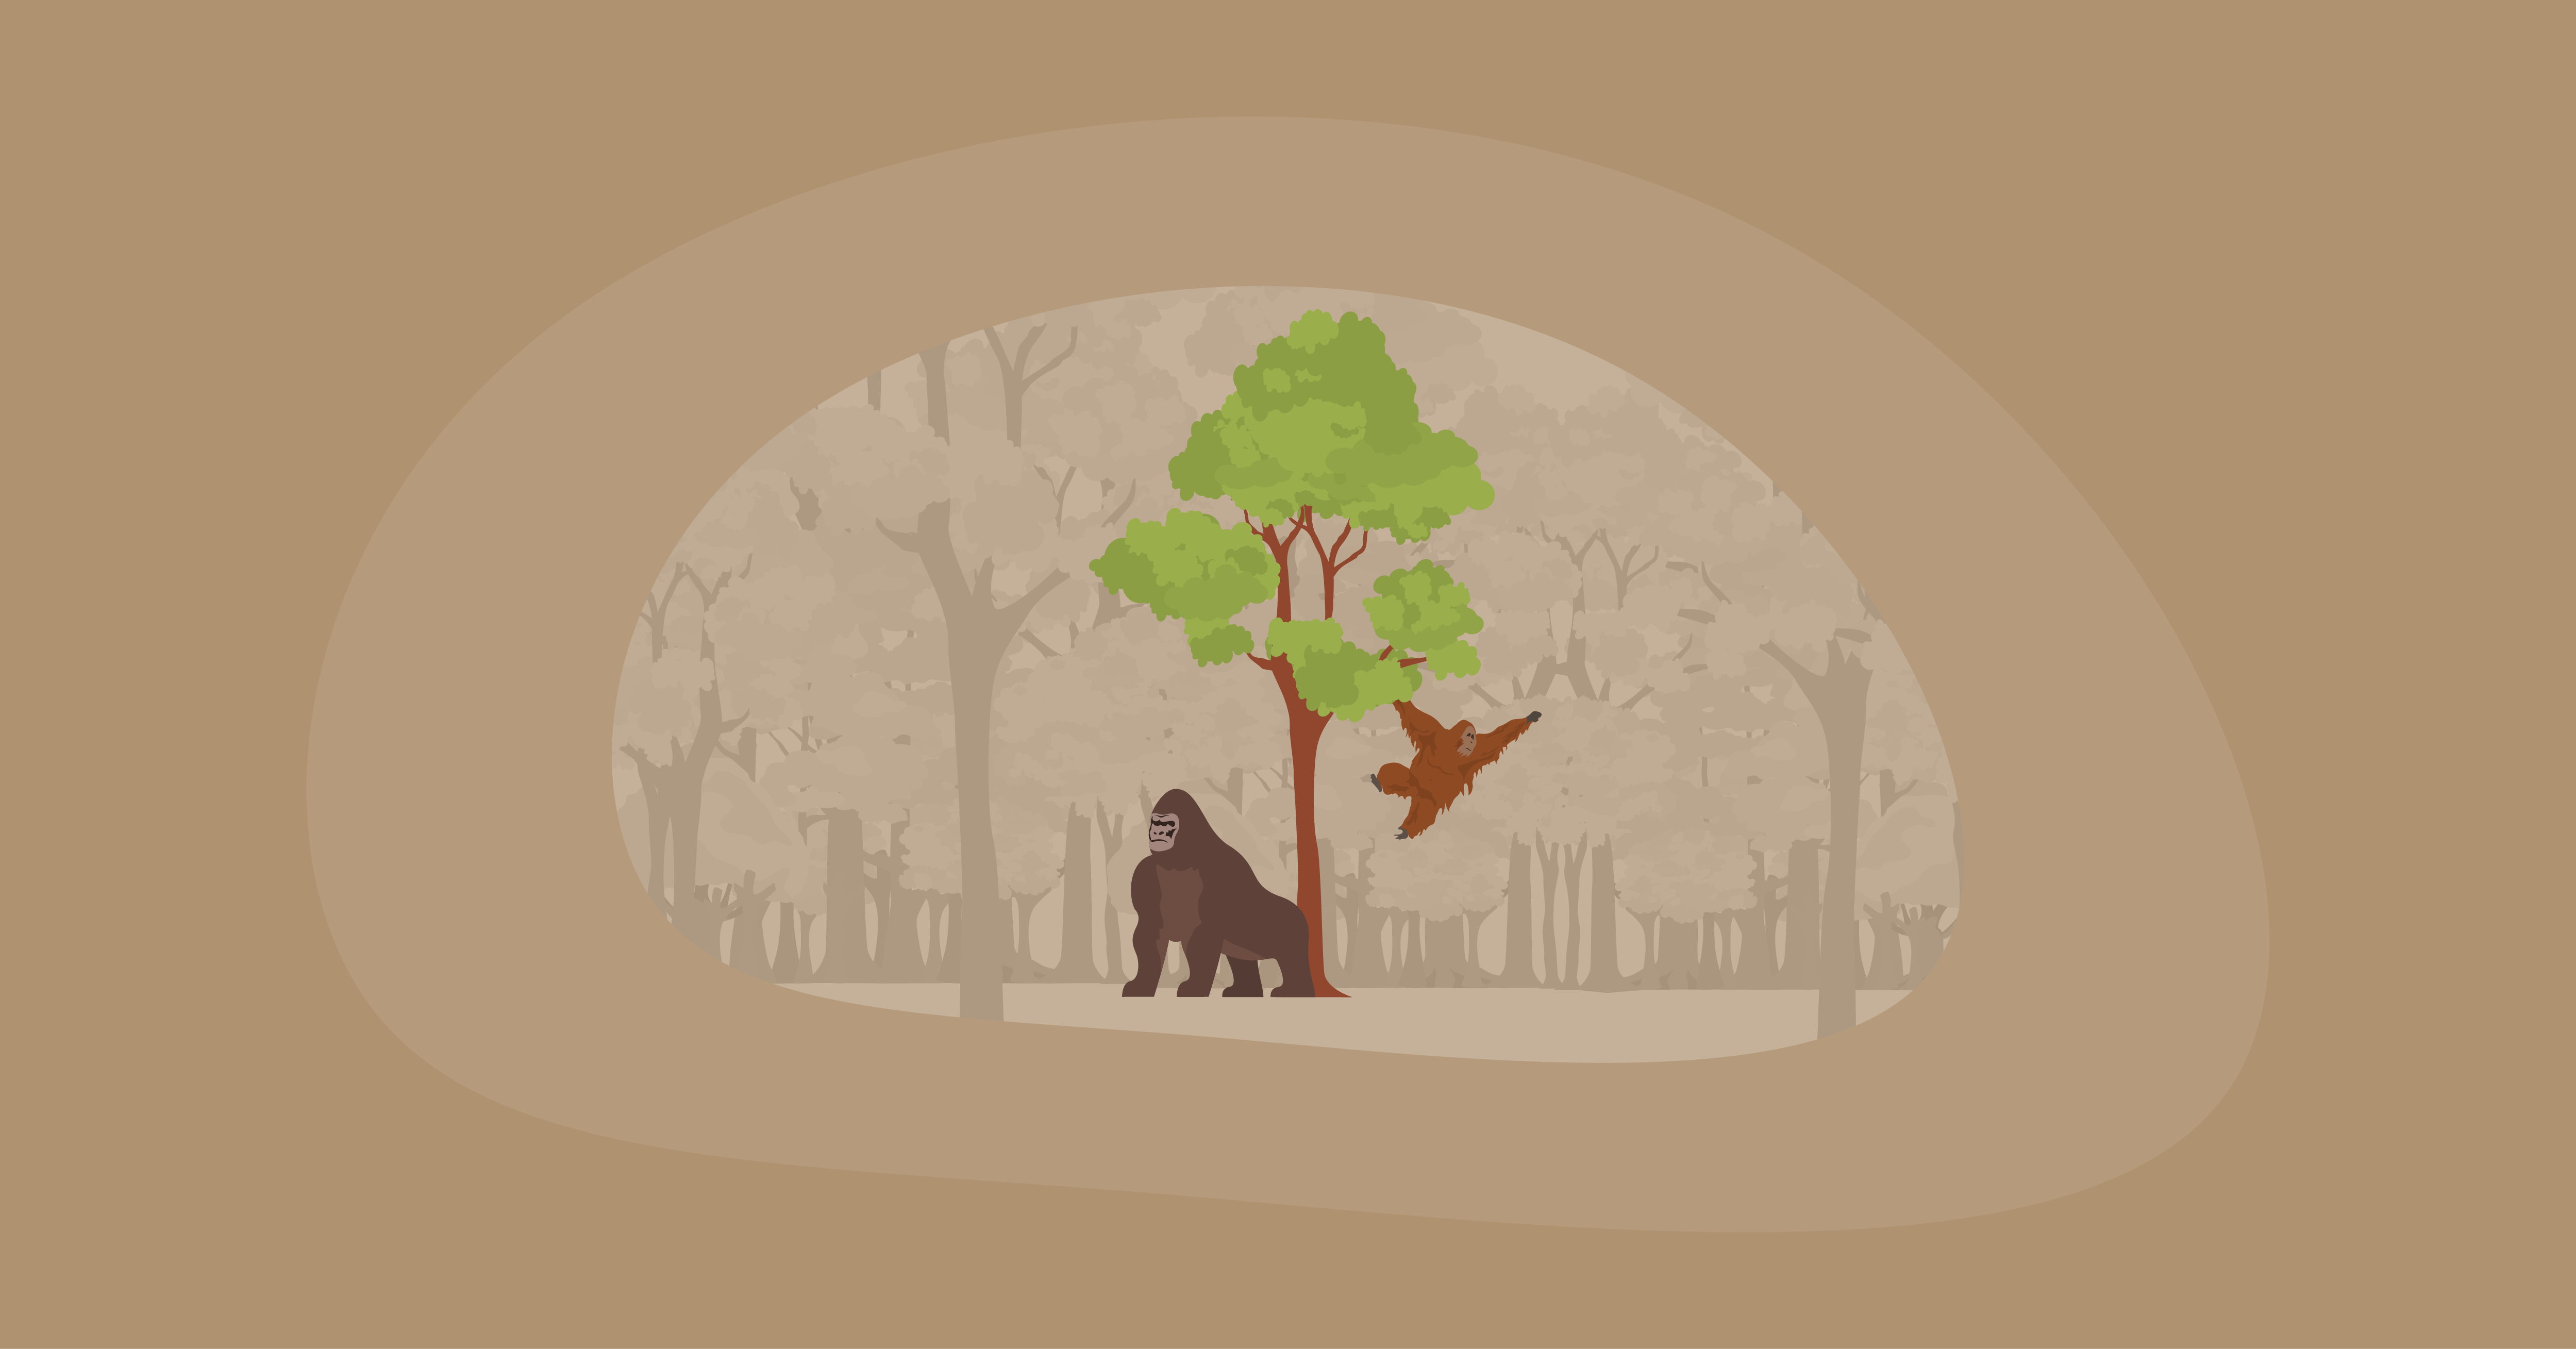 Illustration of apes